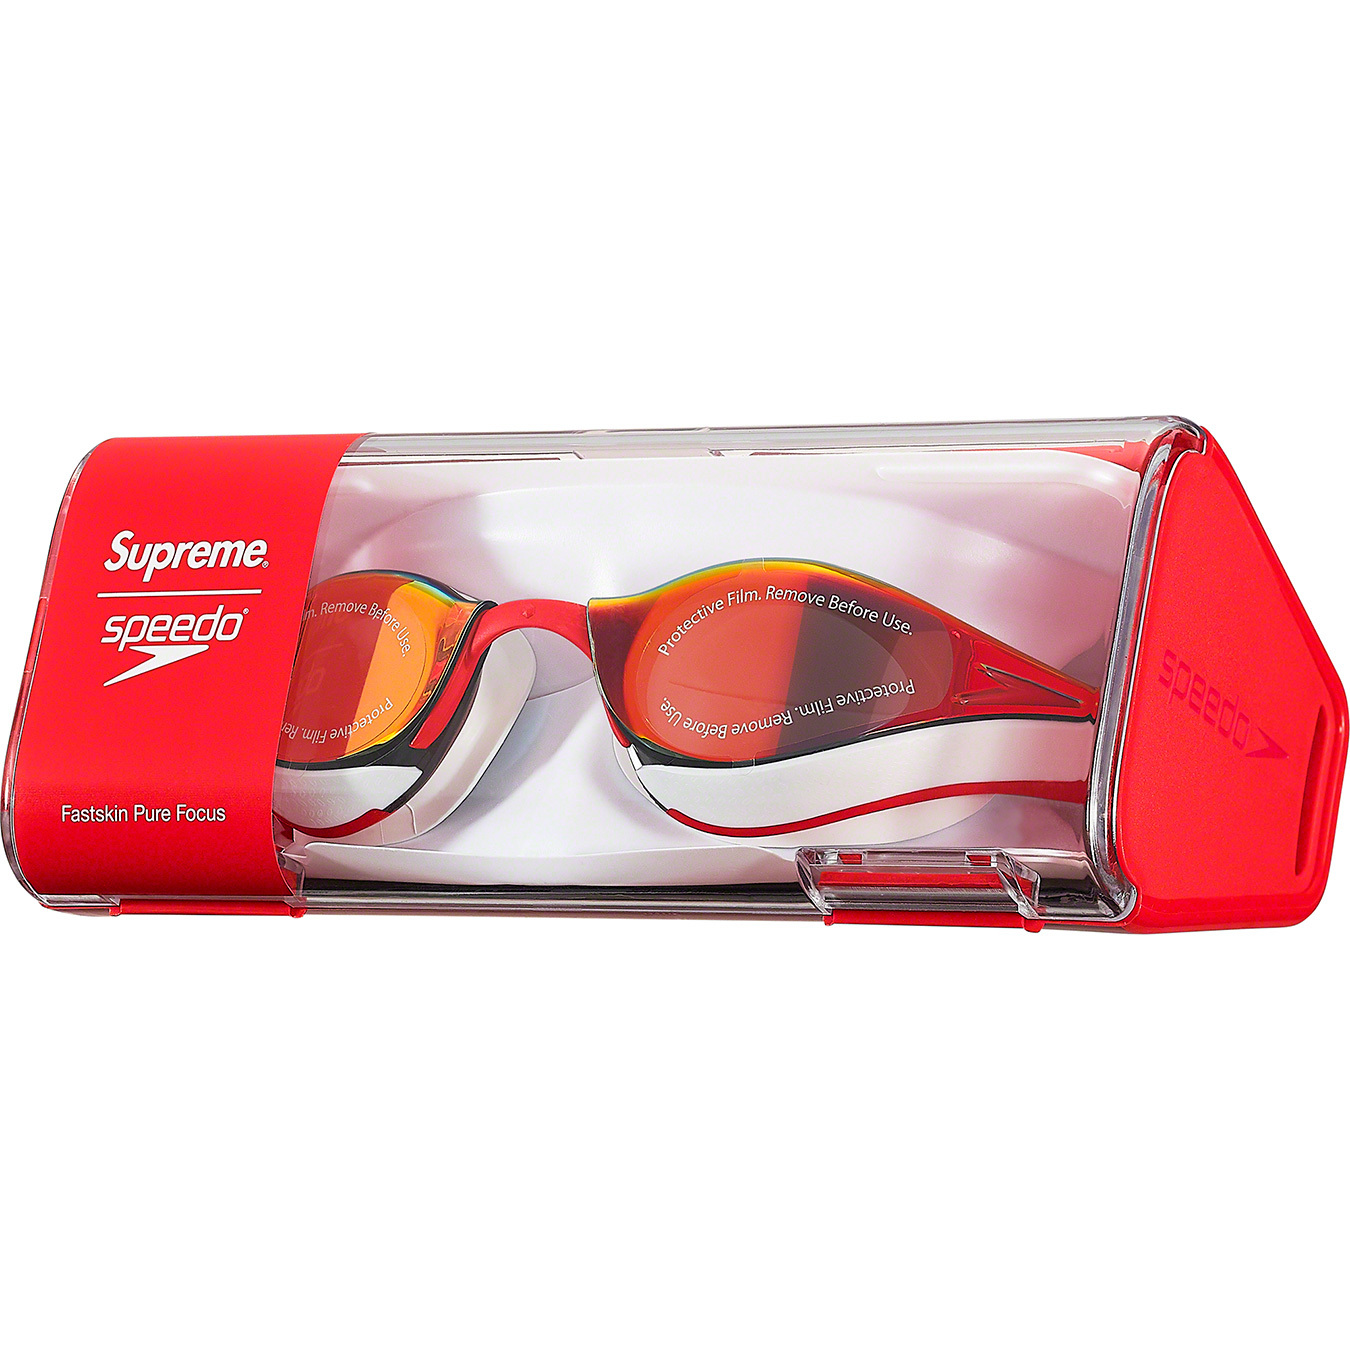 Speedo Swim Goggles - spring summer 2020 - Supreme